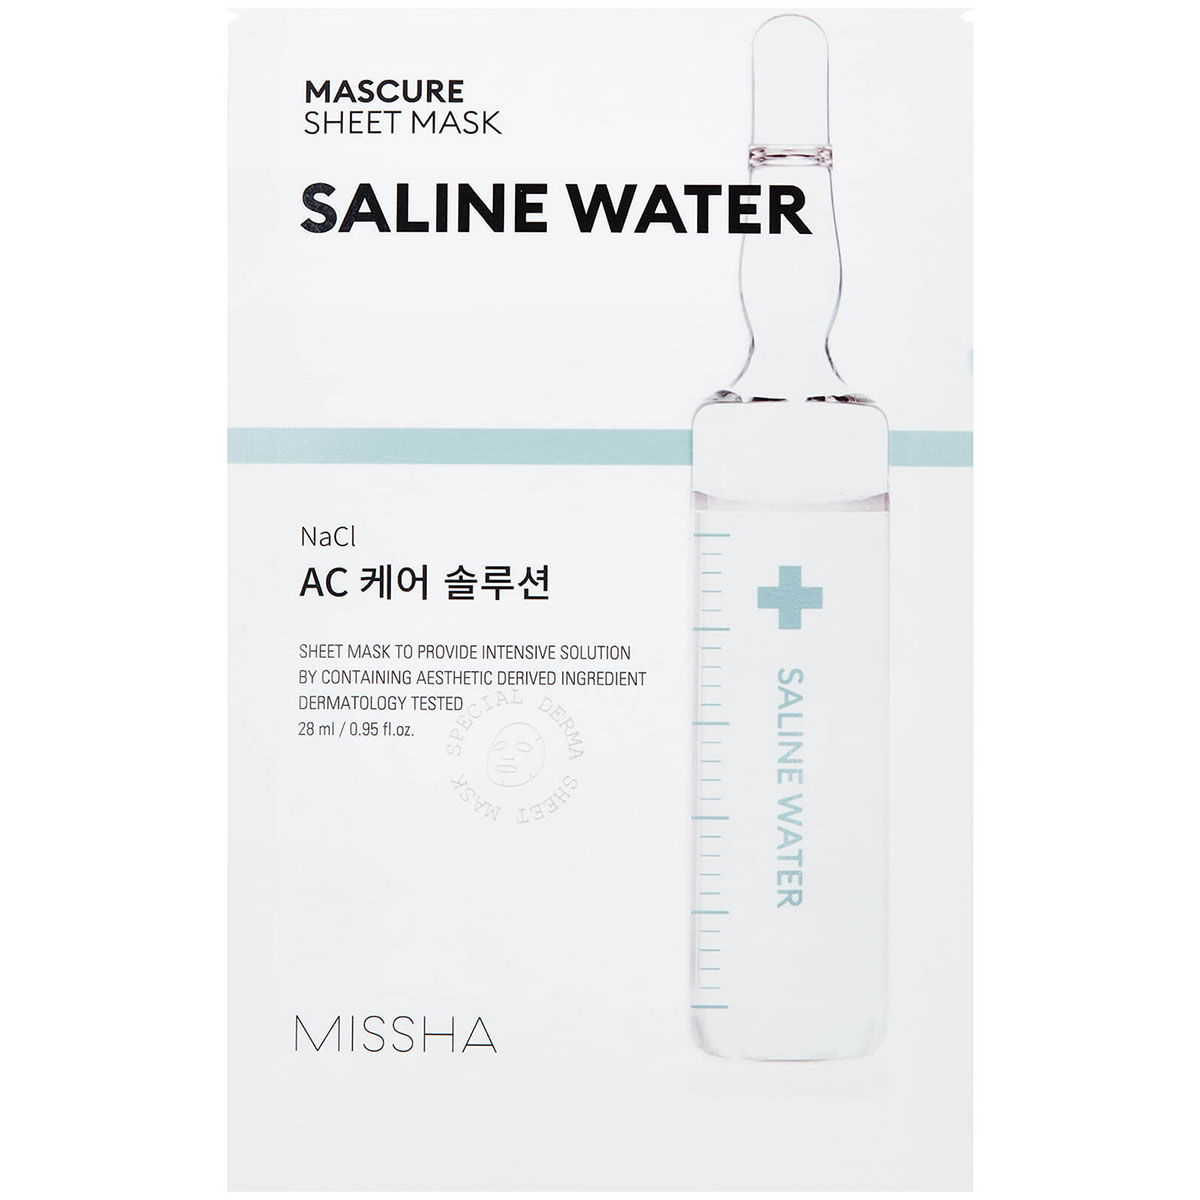 Mascure Ac Care Solution Sheet Mask, 27 ml MISSHA K Beauty Masker